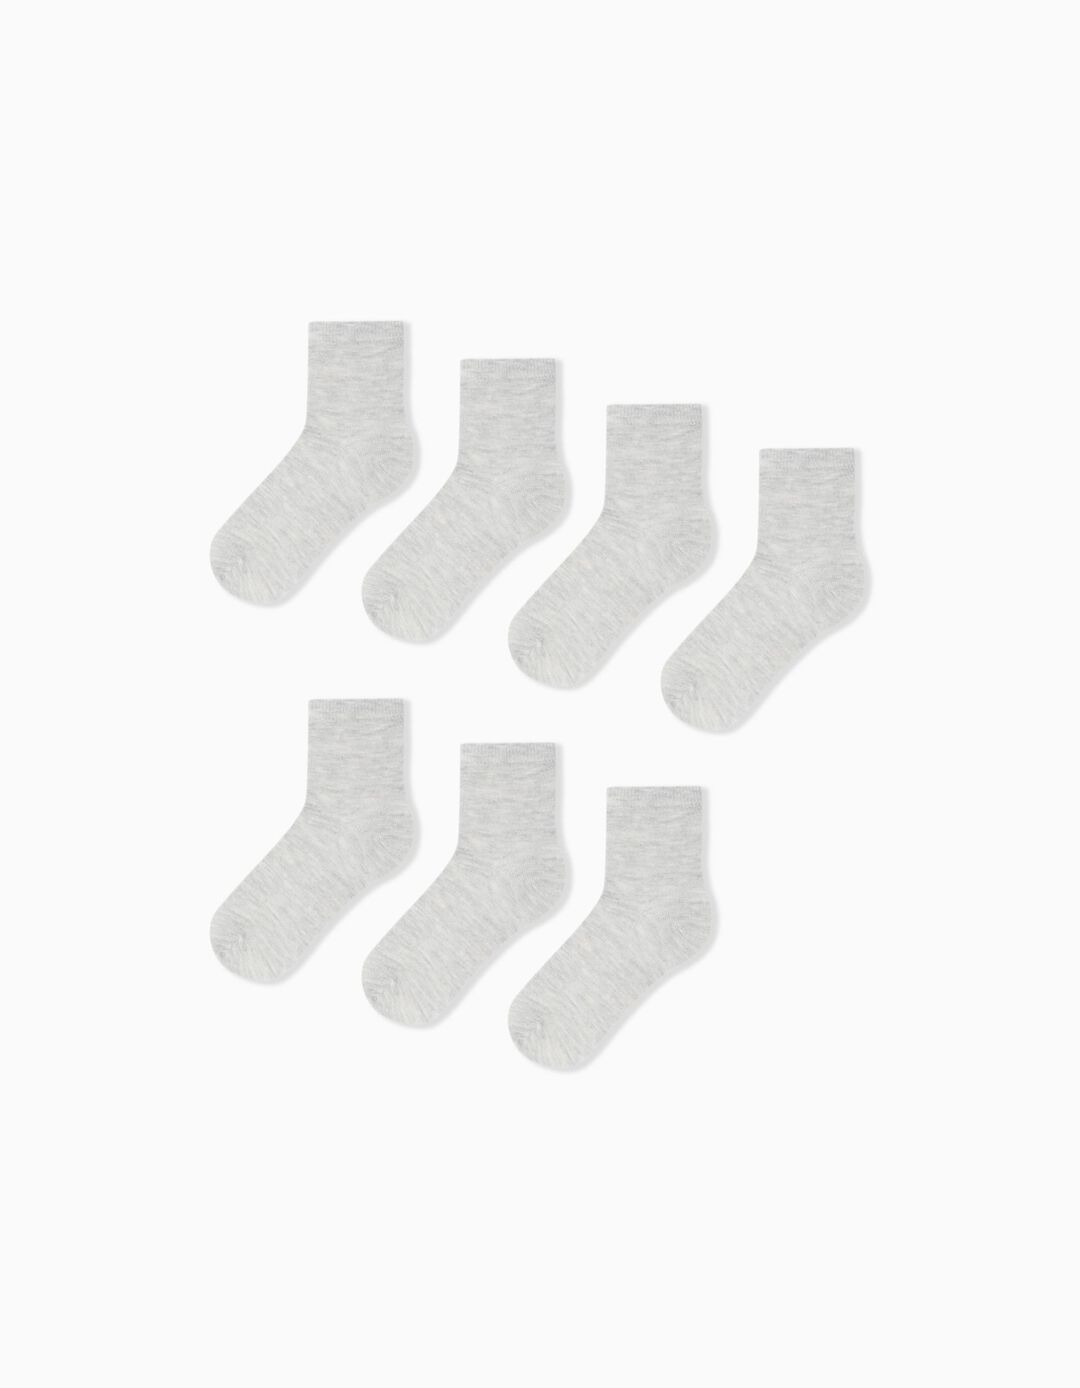 7 Pairs of Socks Pack, Boys, Light Grey